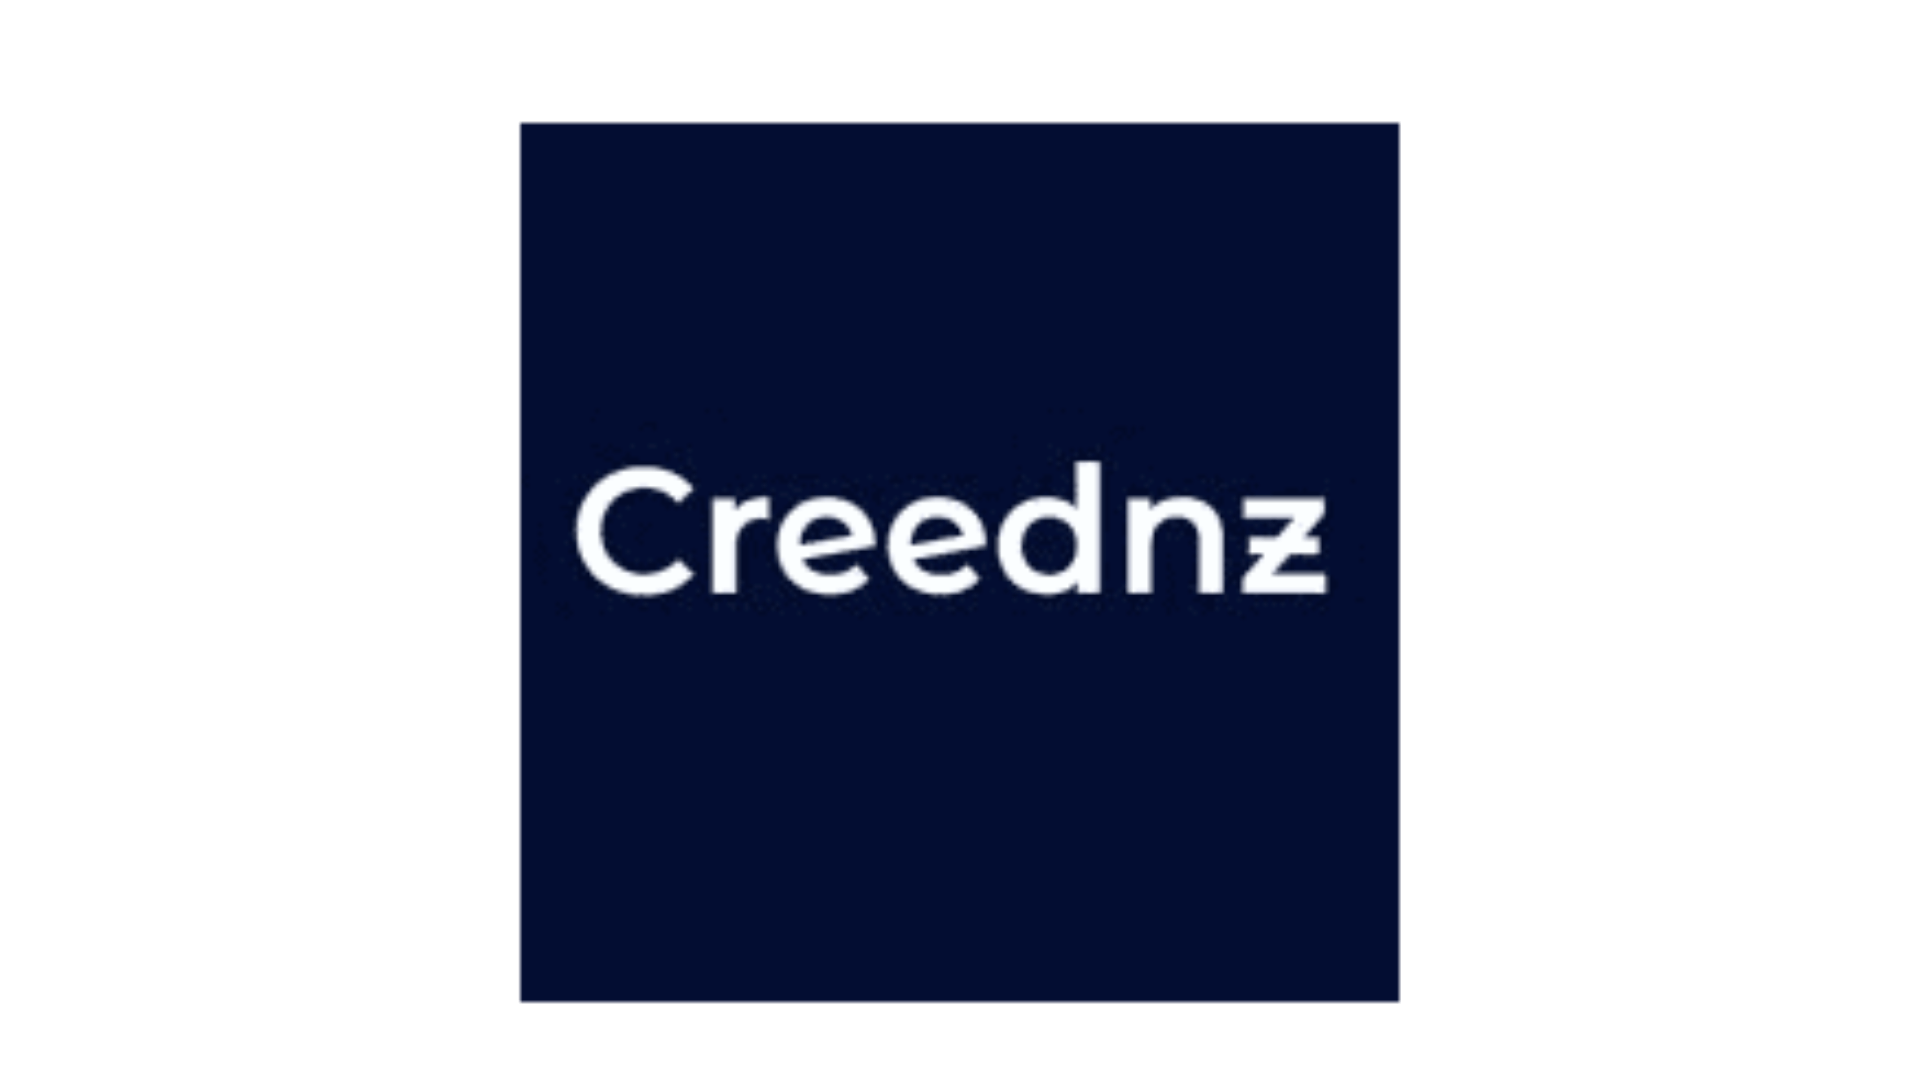 Creednz logo